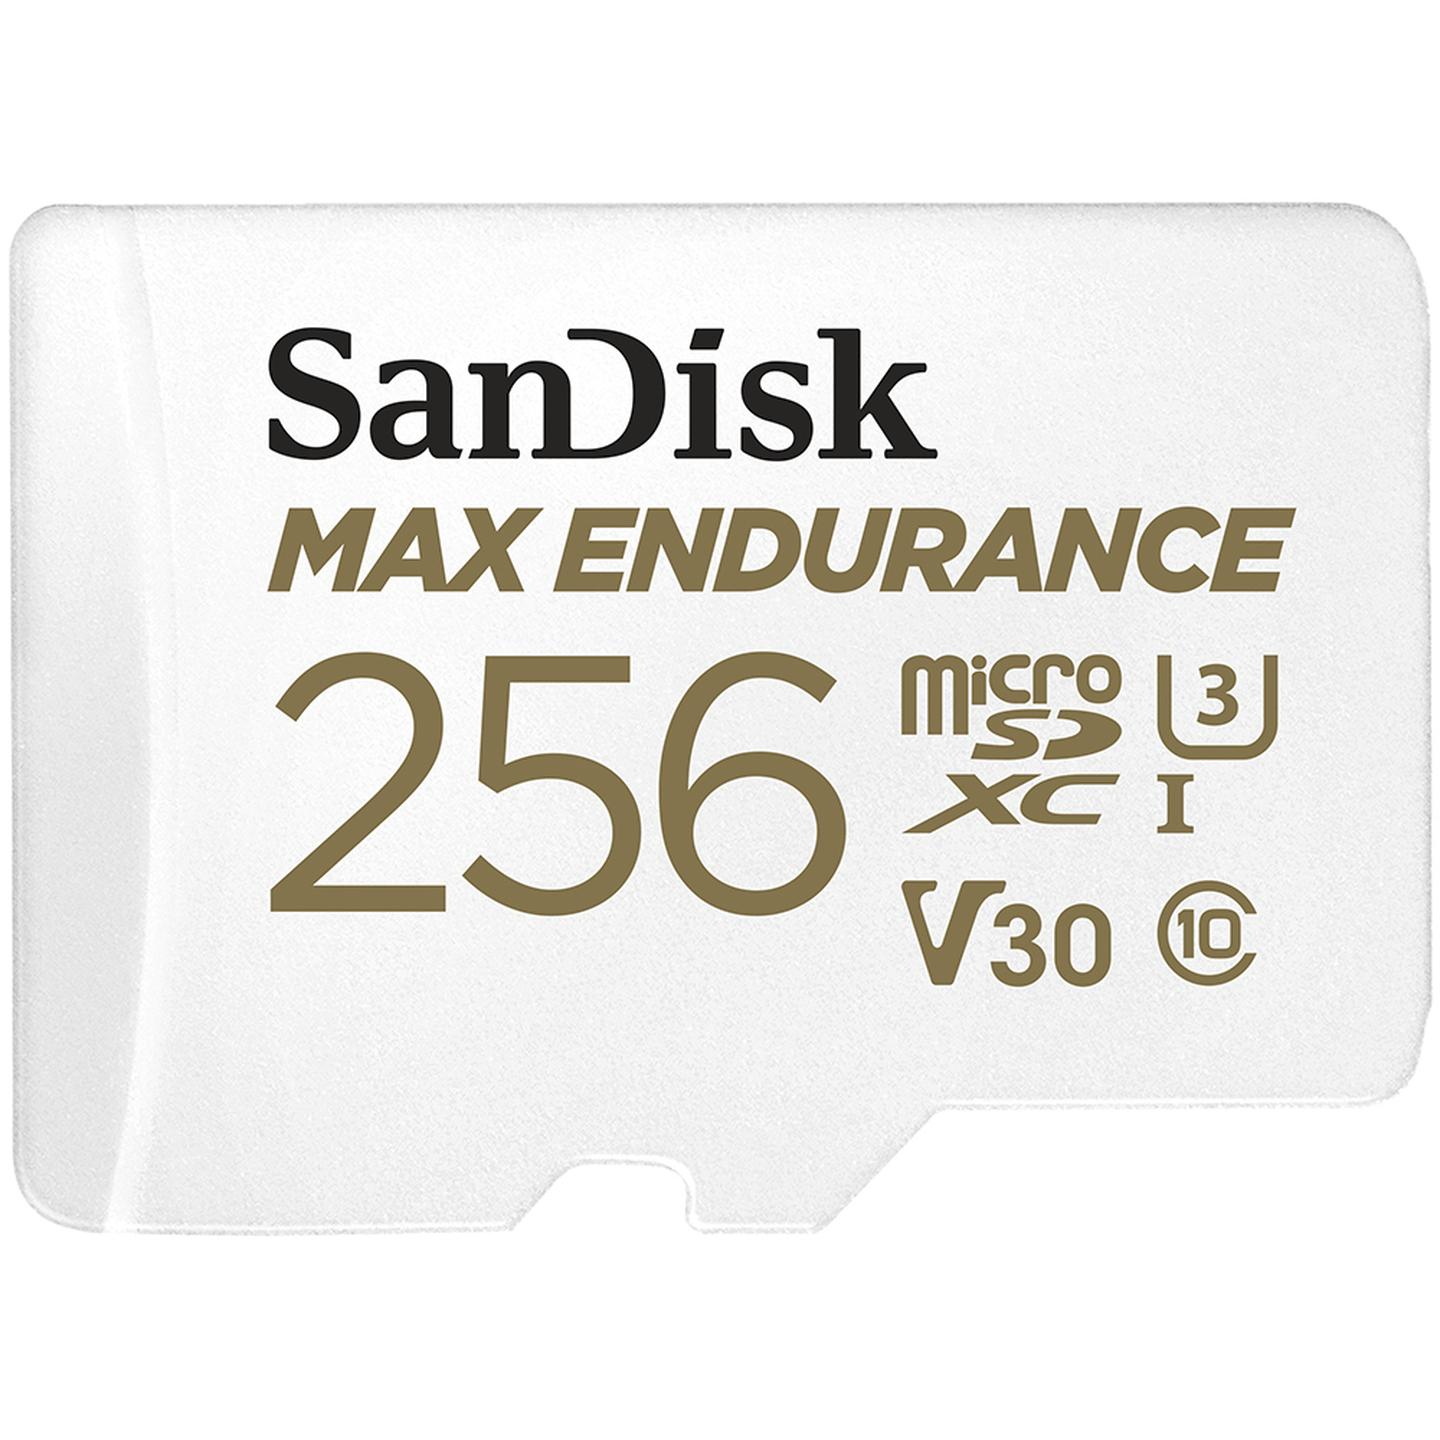 Sandisk 256GB High Endurance MAX microSDXC Card